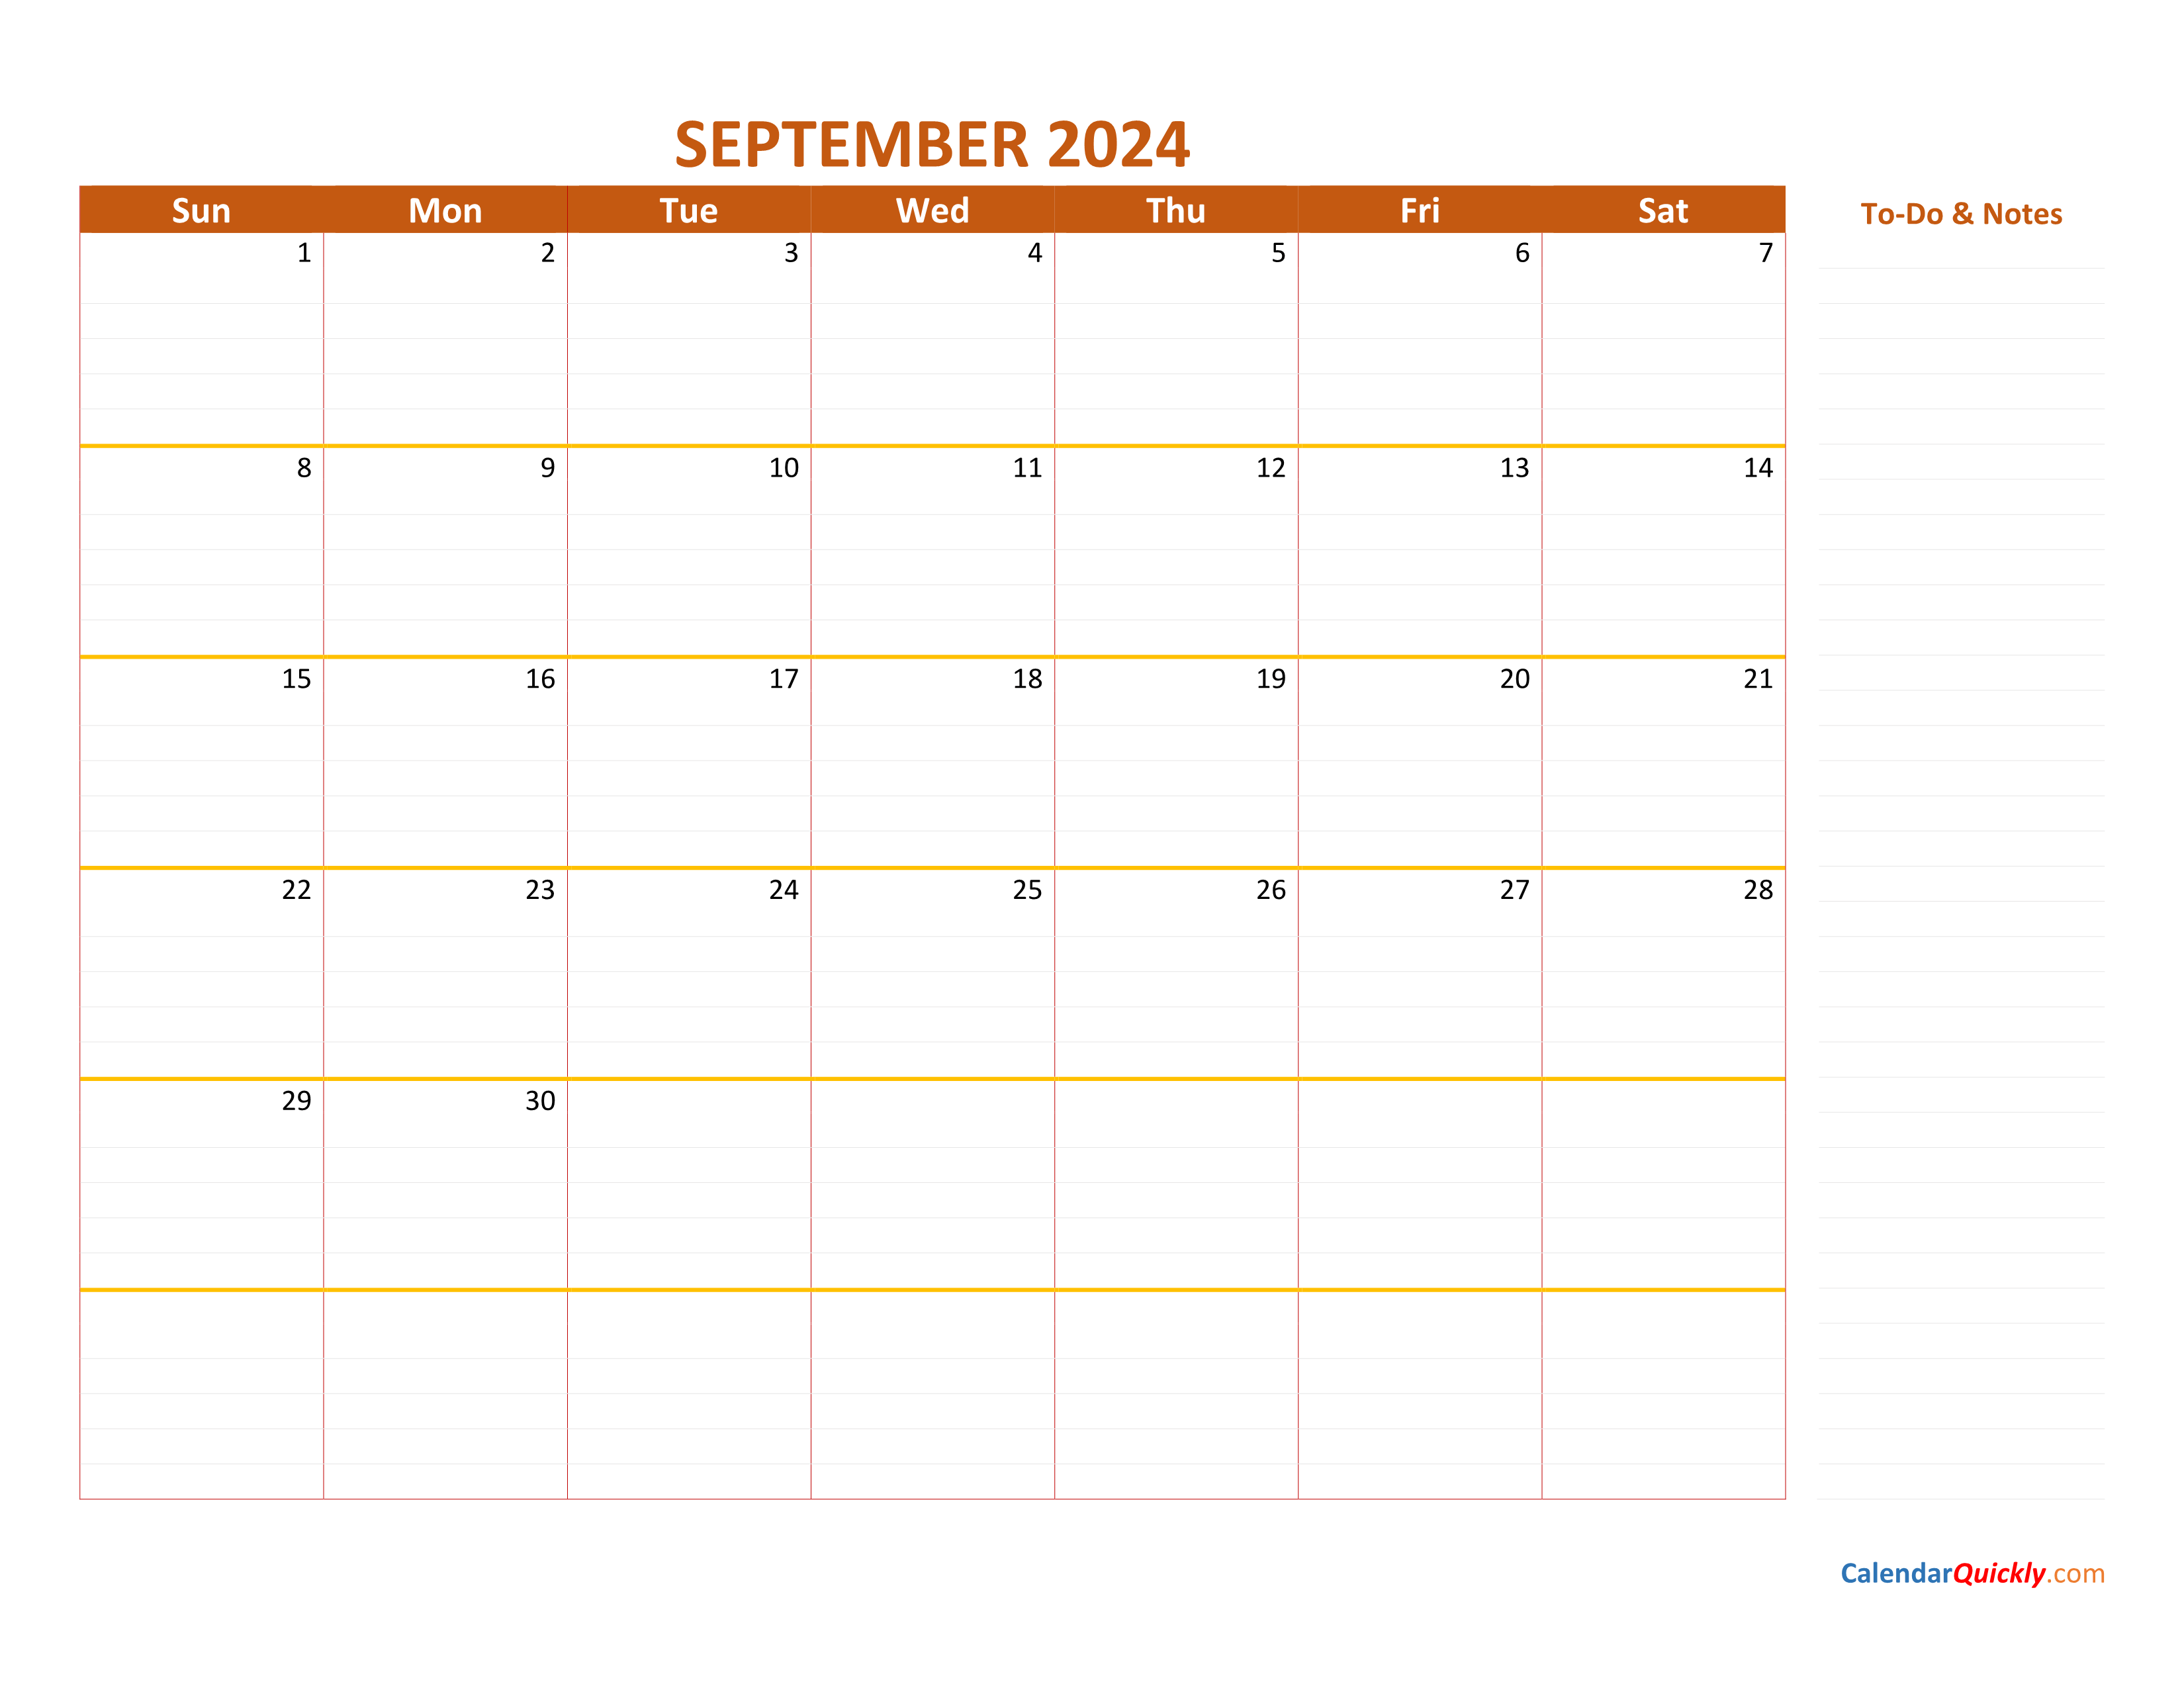 September 2024 Calendar Calendar Quickly